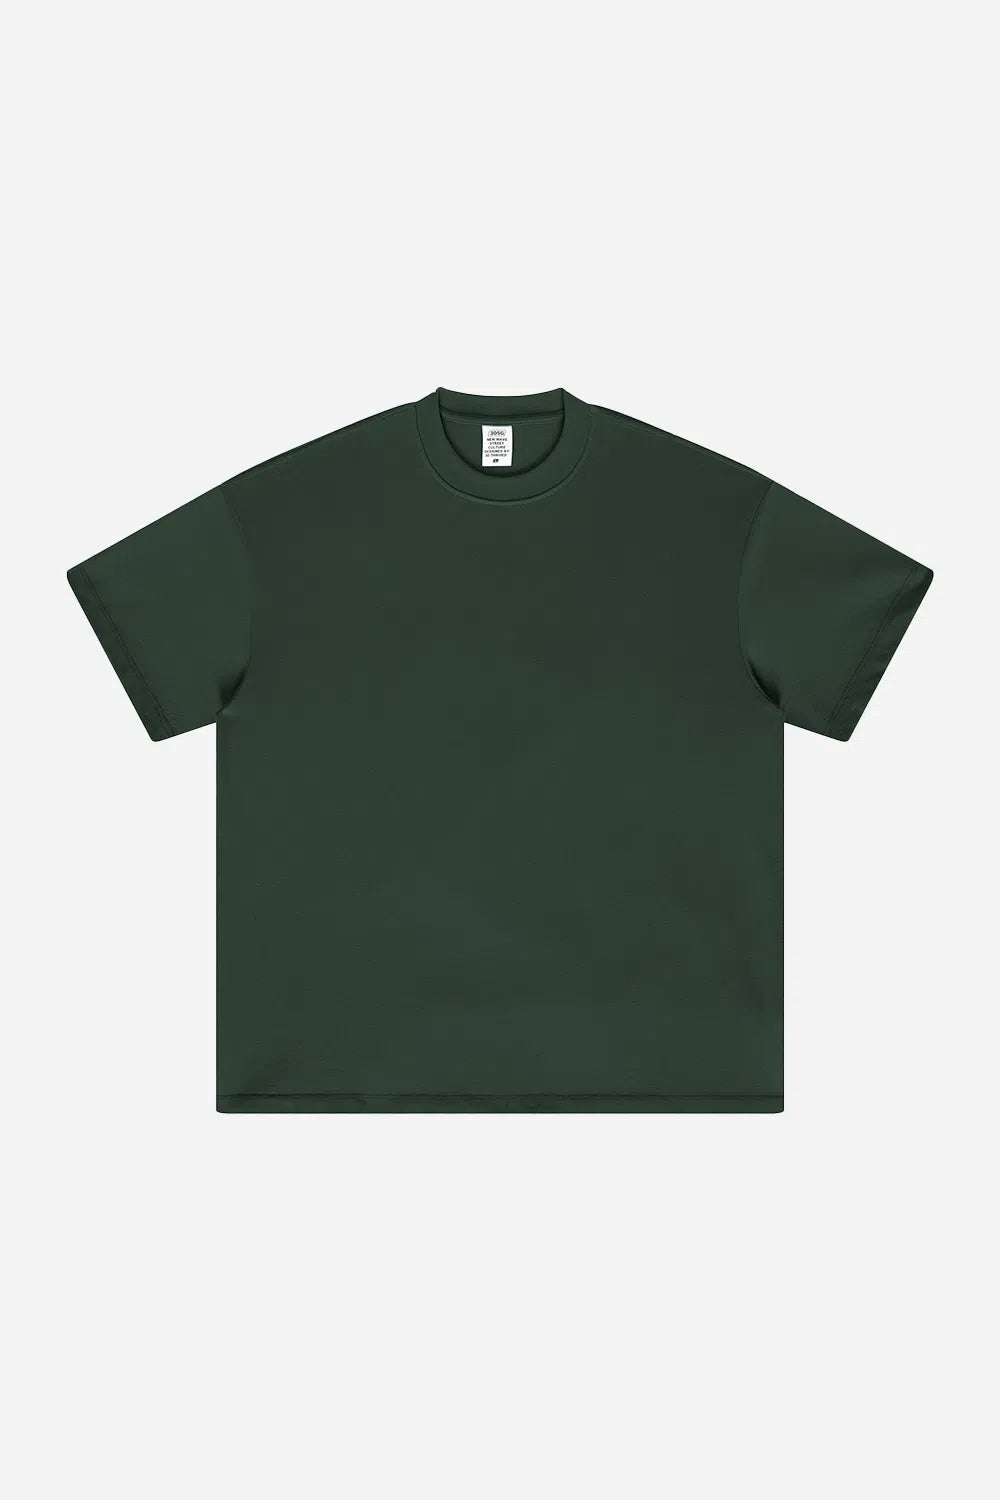 T-Shirt Blank Heavy 100% Cotton - DARKISH GREEN-LOTABY